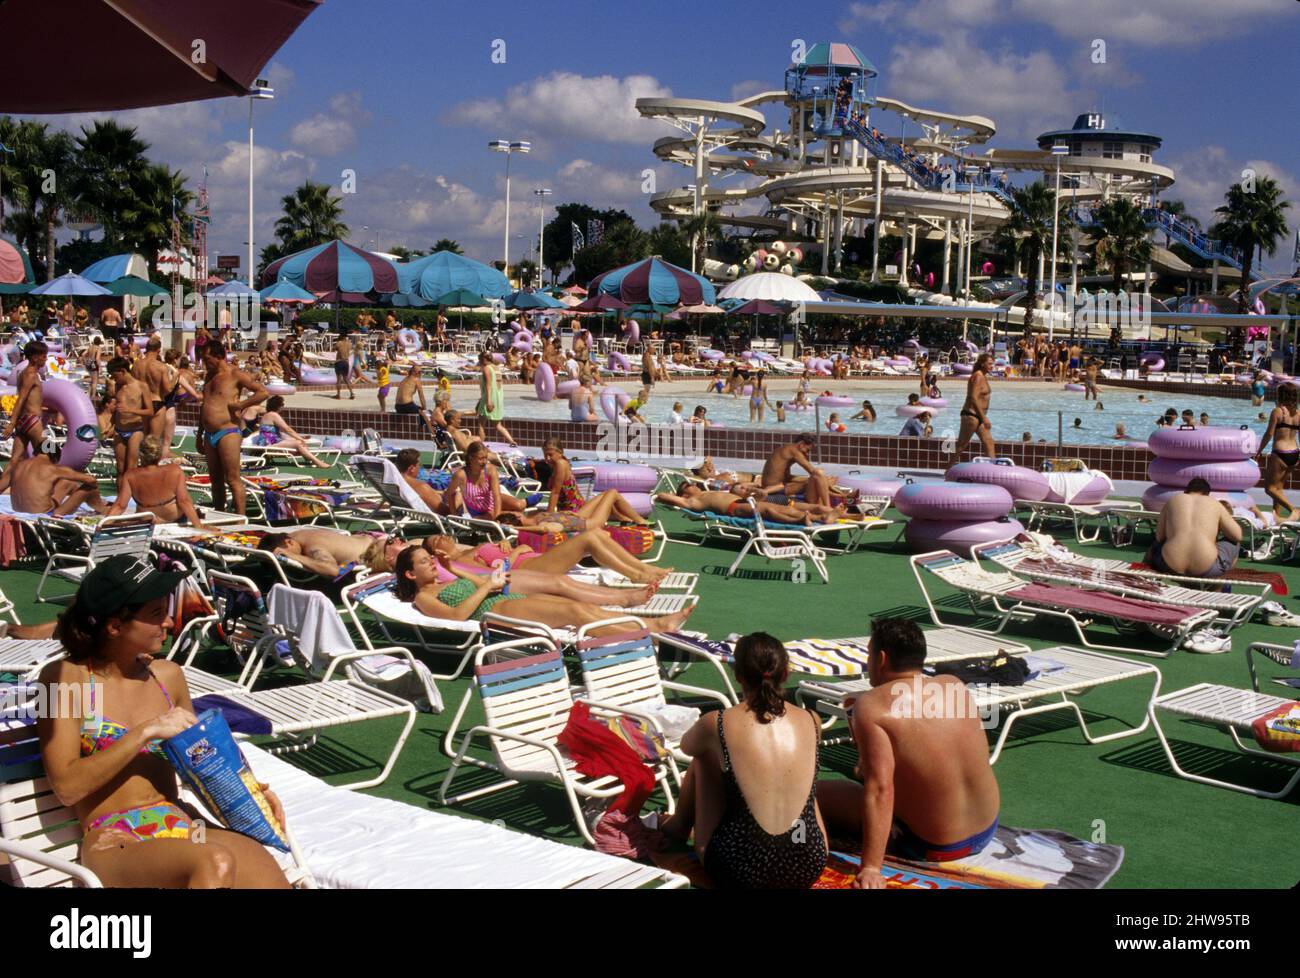 usa florida orlando aquatic park crowd summer vacation Stock Photo